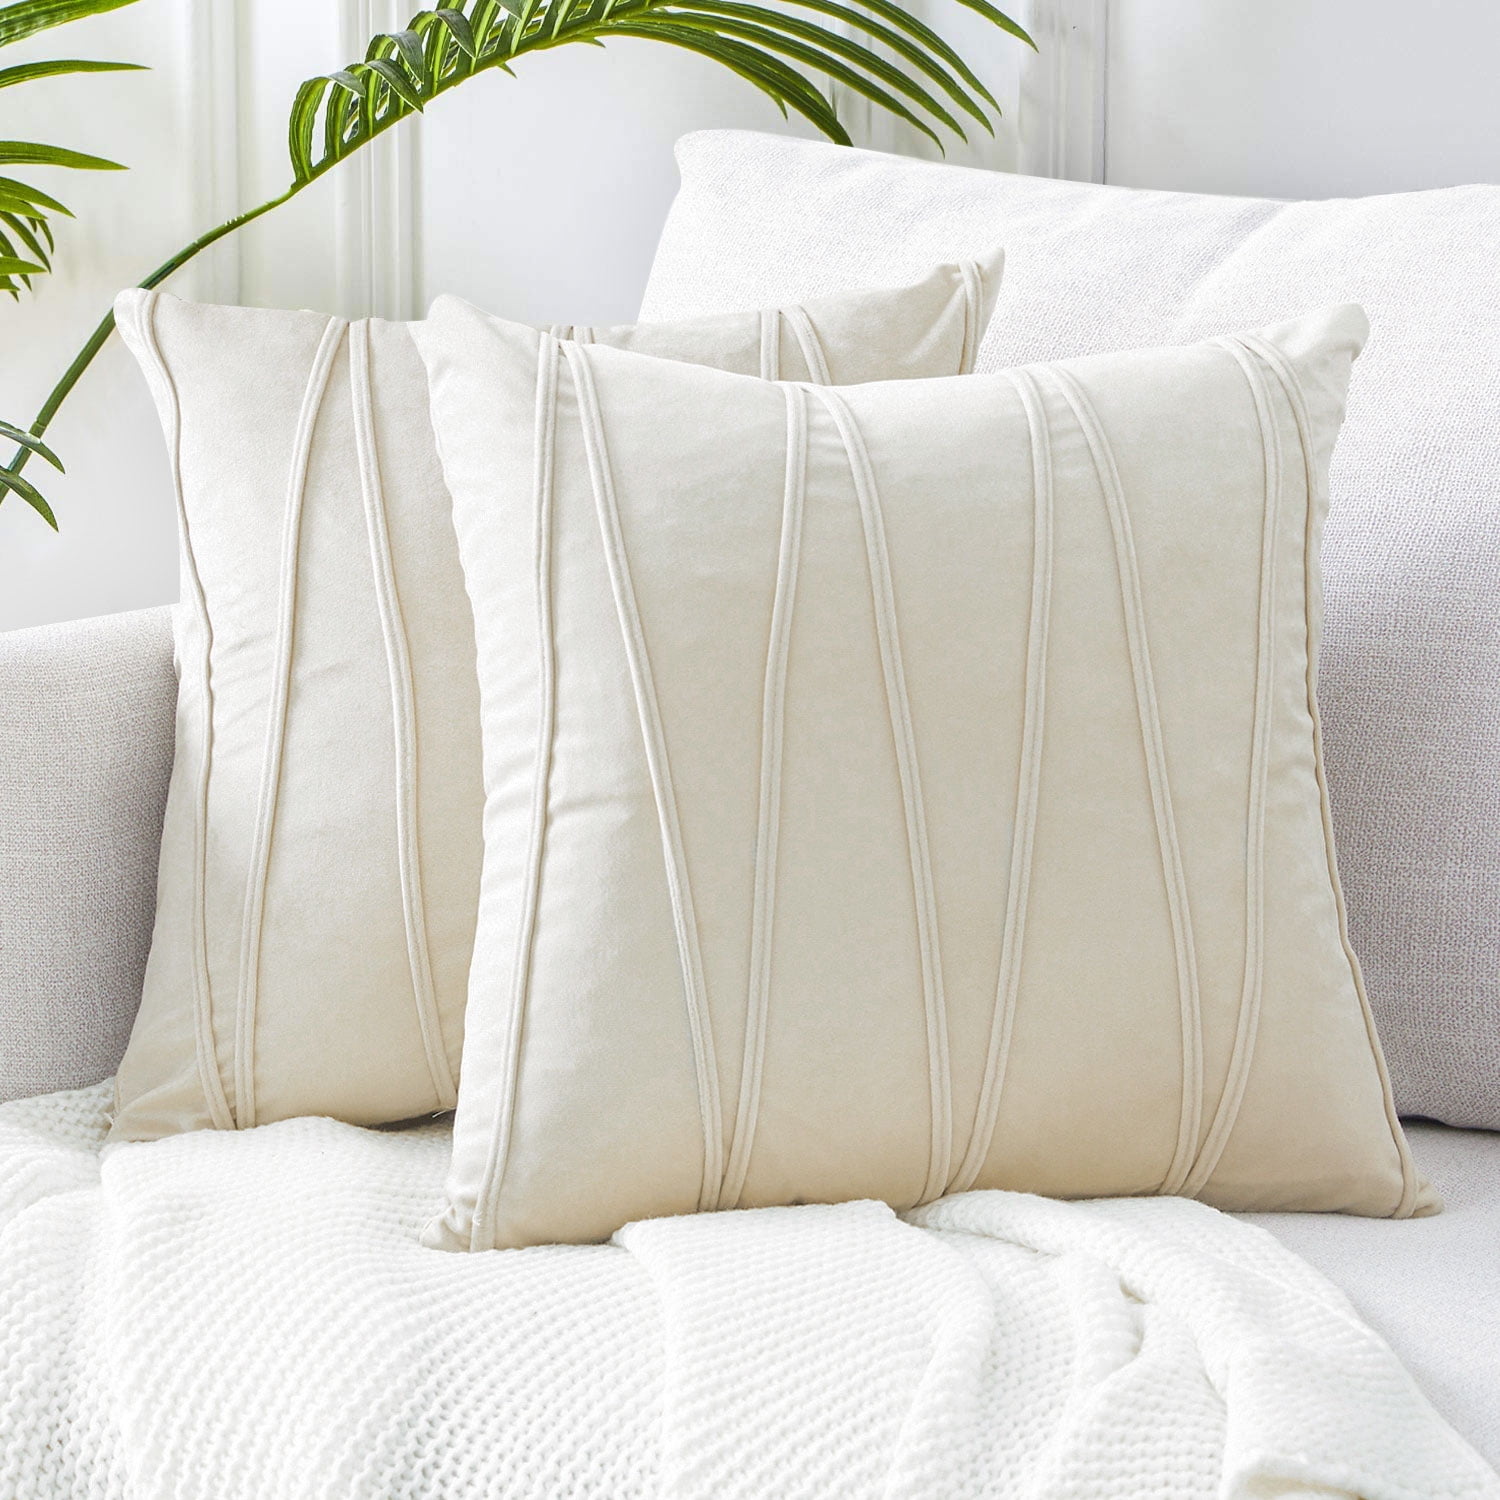 Topfinel Cream Decorative Throw Pillow Covers 18 x 18 Inch